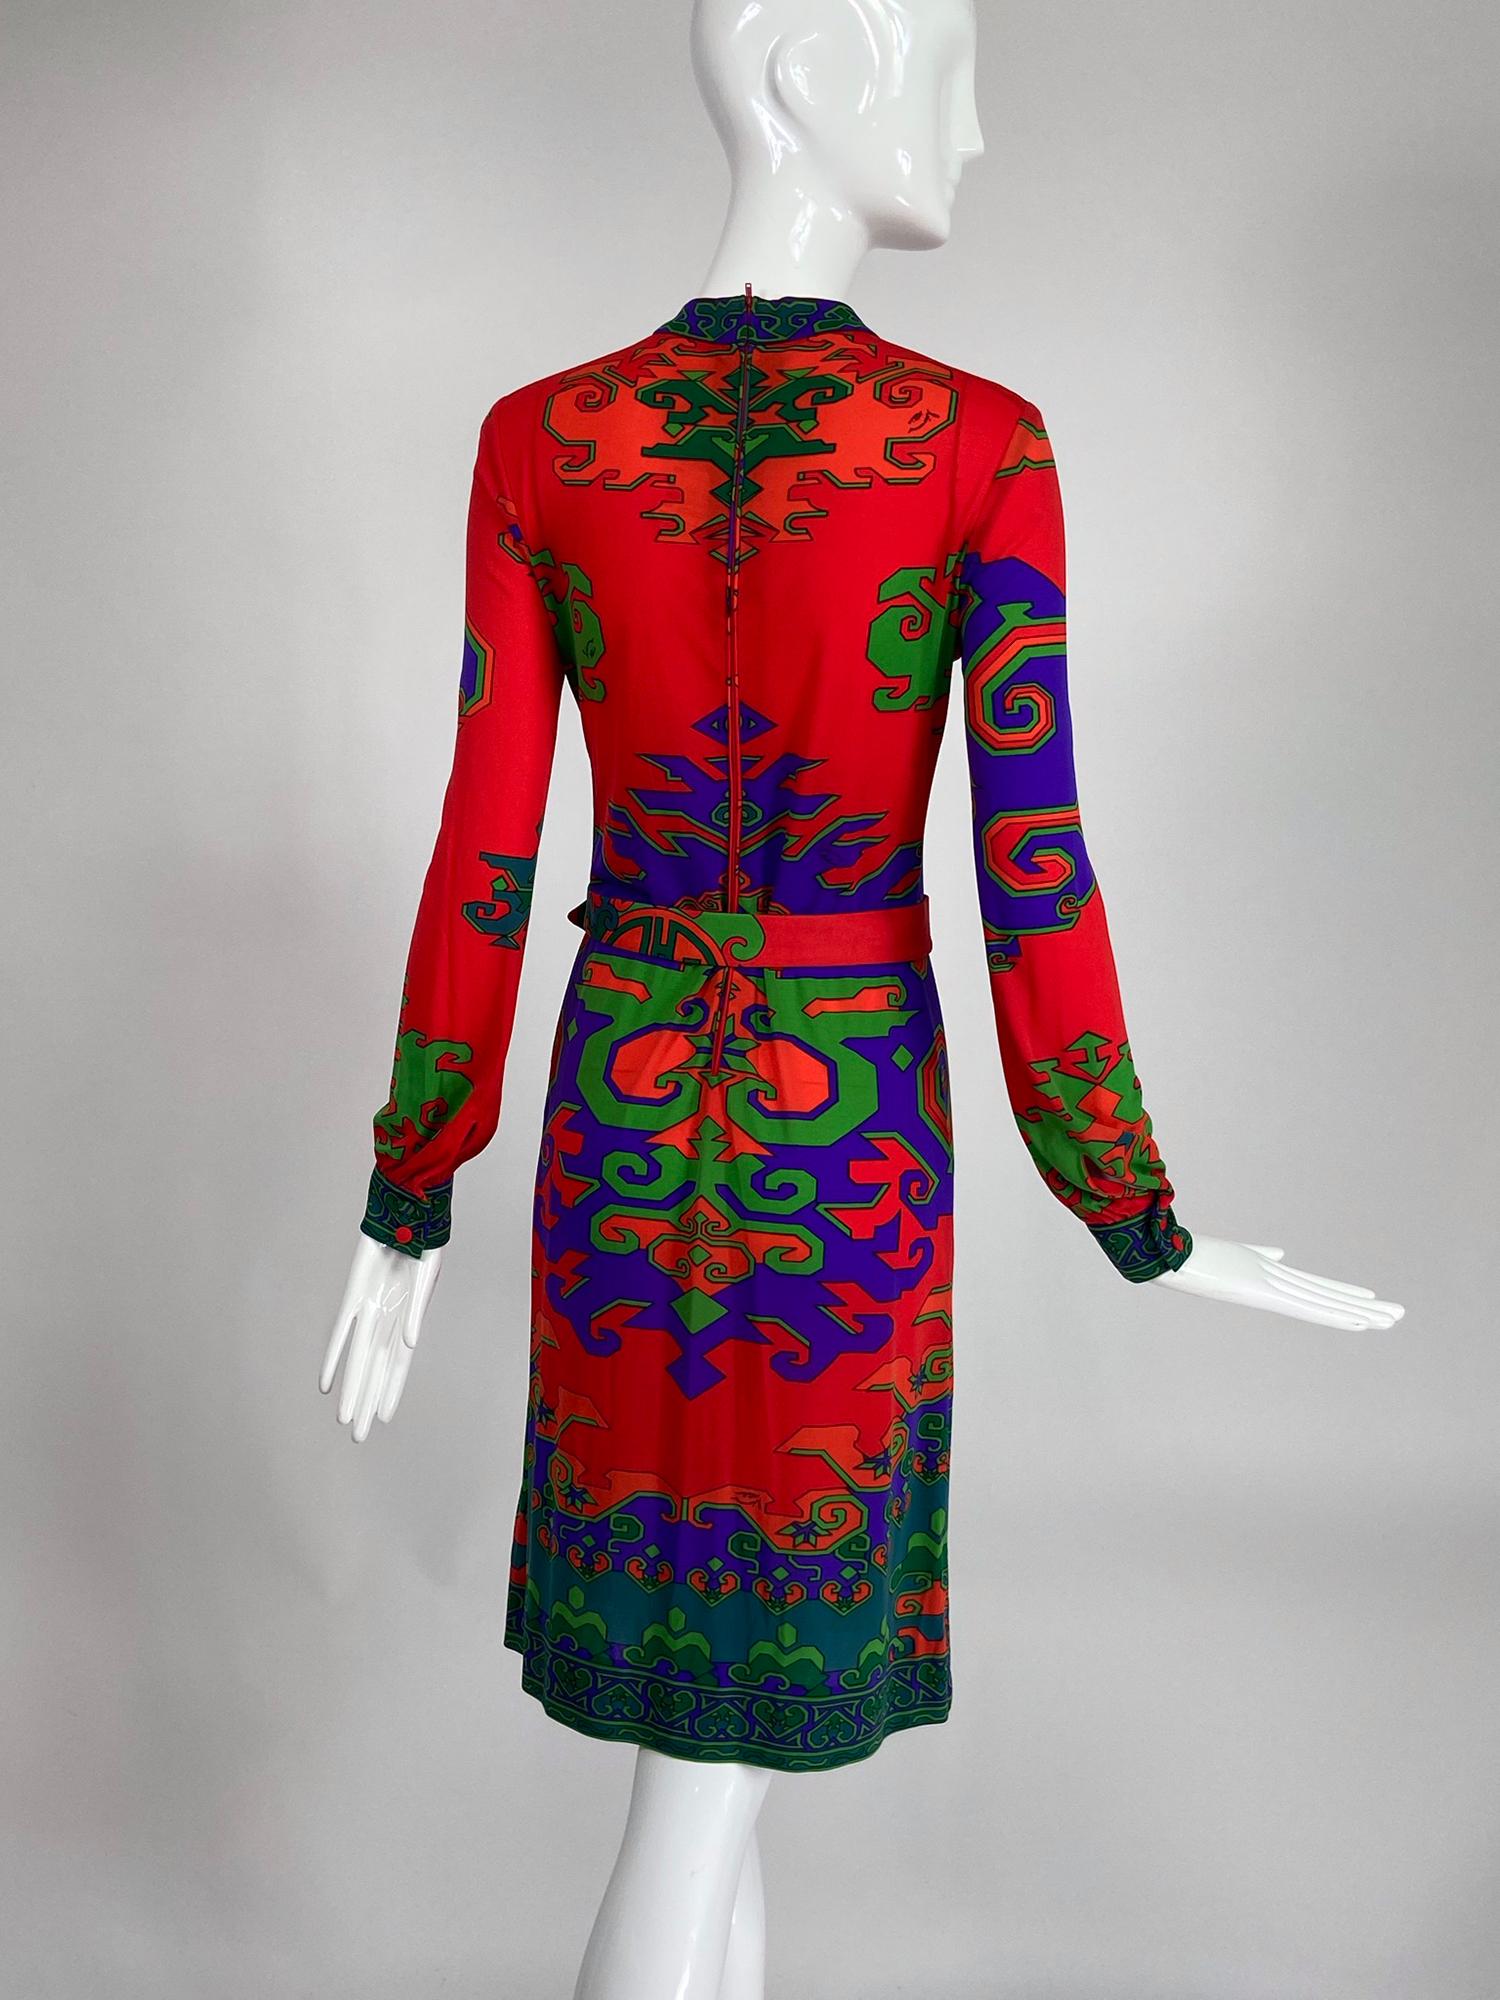 Women's Leonard Fashion Paris Silk Jersey Geometric Design Dress 1970s